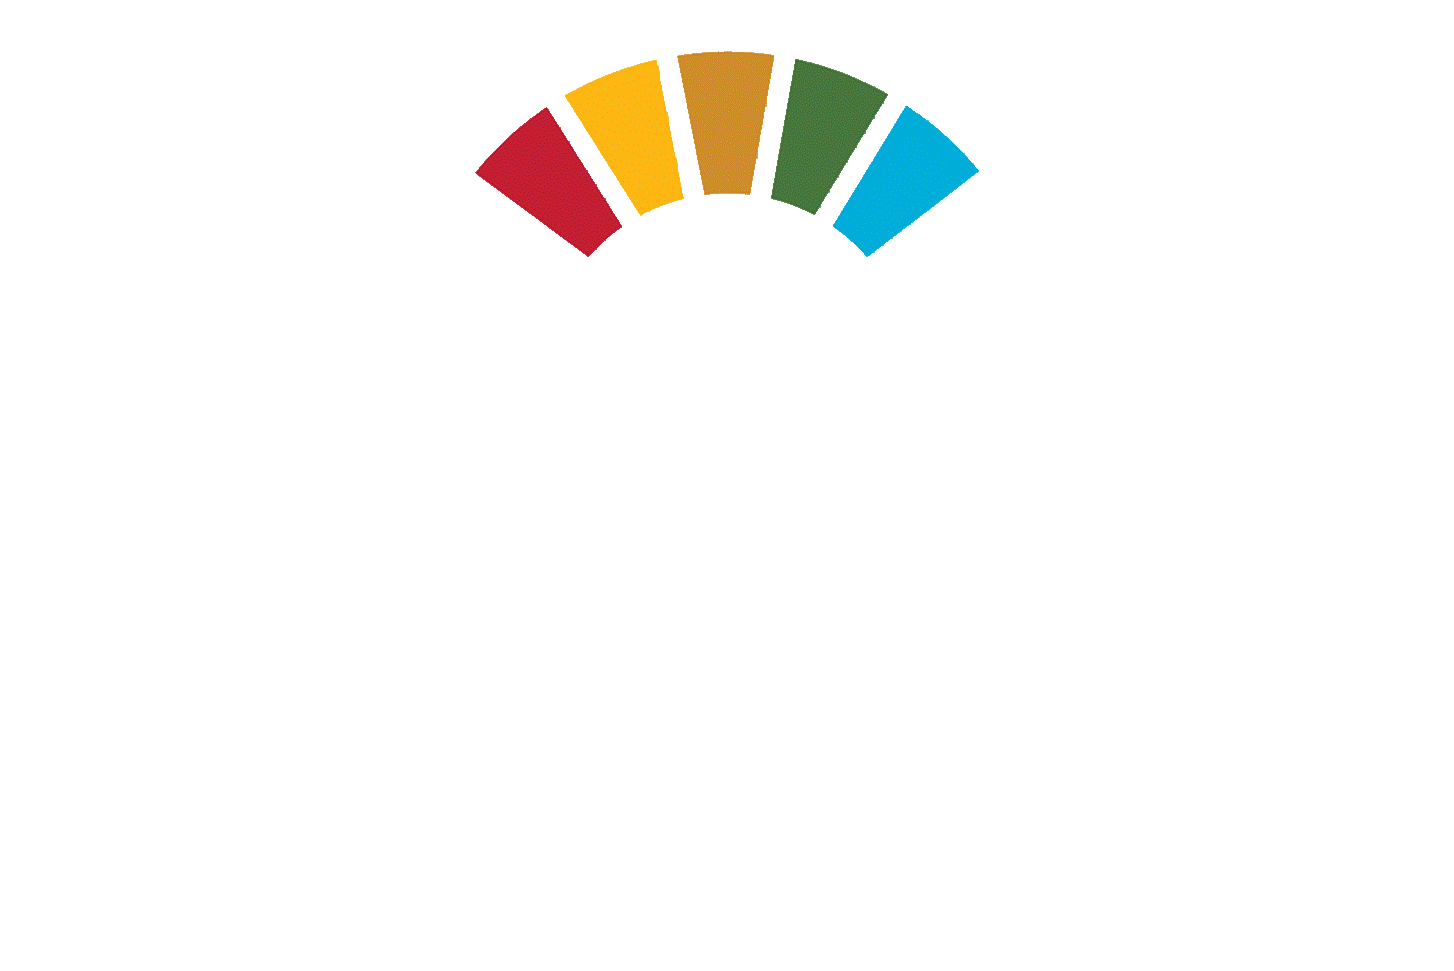 Bettersport